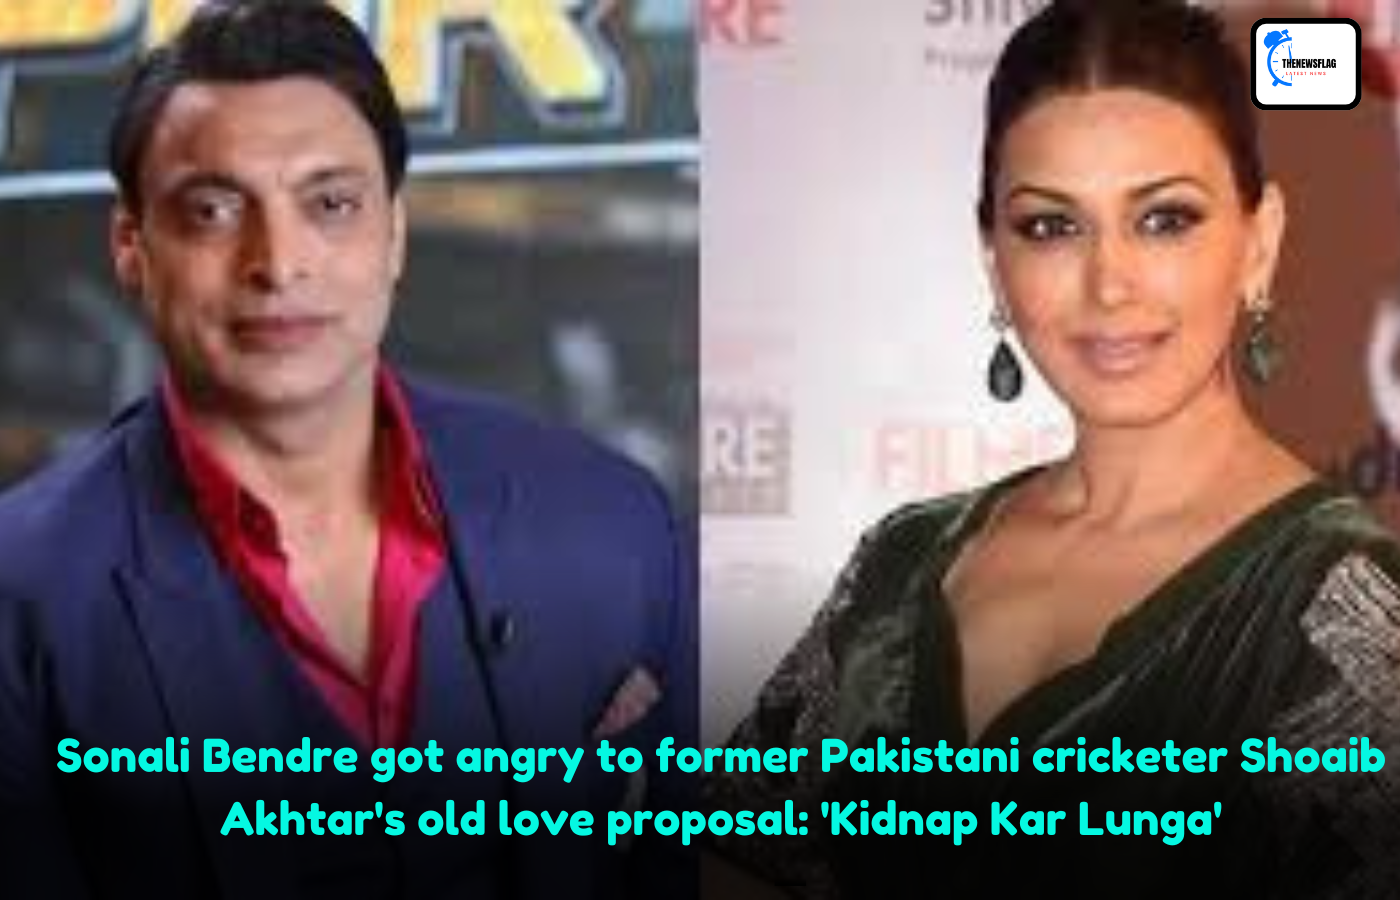 Sonali Bendre got angry to former Pakistani cricketer Shoaib Akhtar's old love proposal: 'Kidnap Kar Lunga'